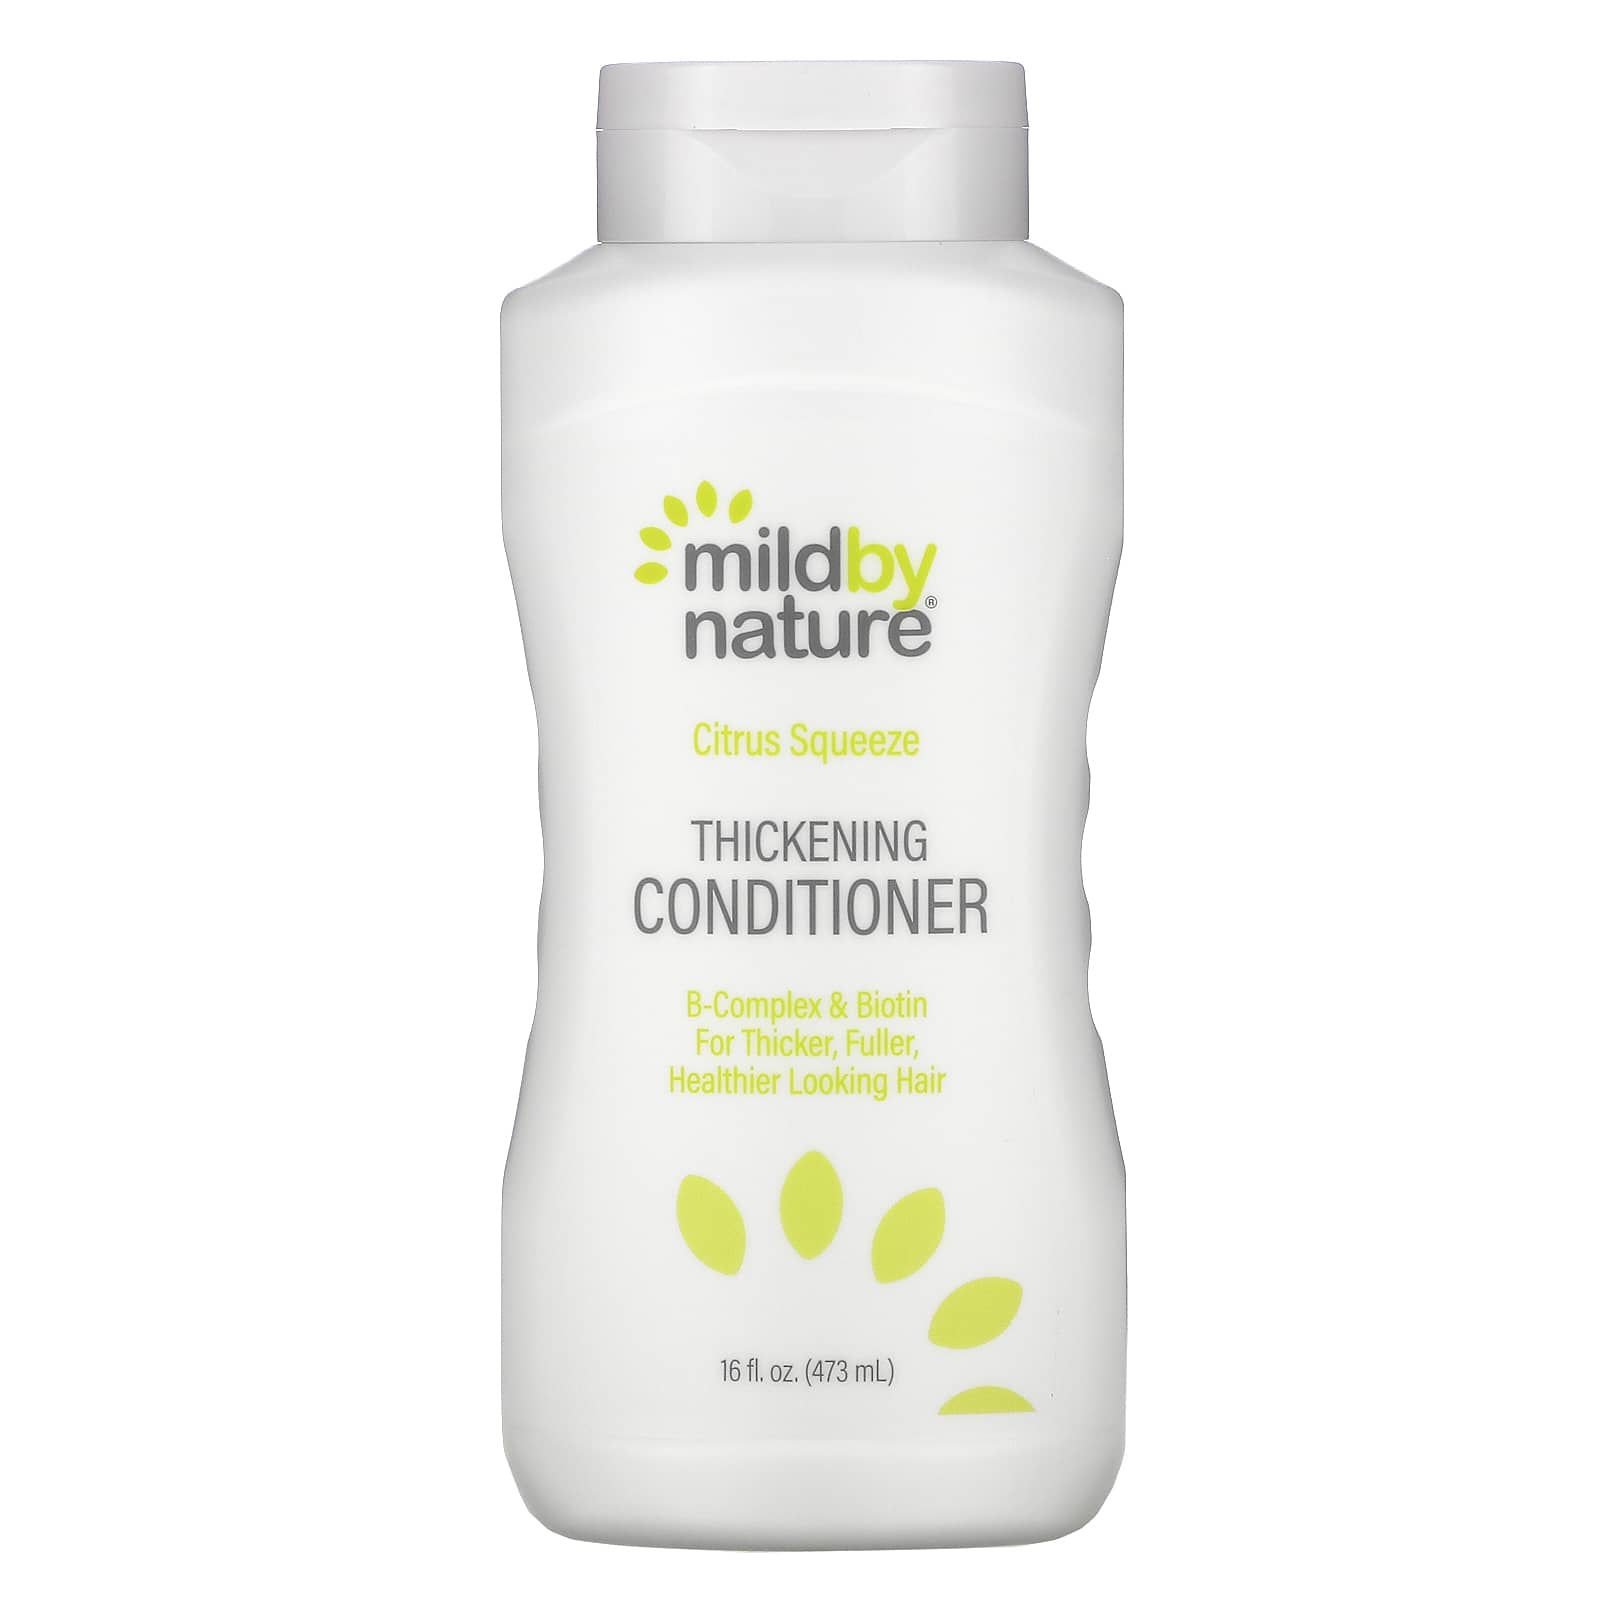 Mild By Nature Thickening Conditioner B-Complex and Biotin Citrus Squeeze - 16 fl oz (473 ml)